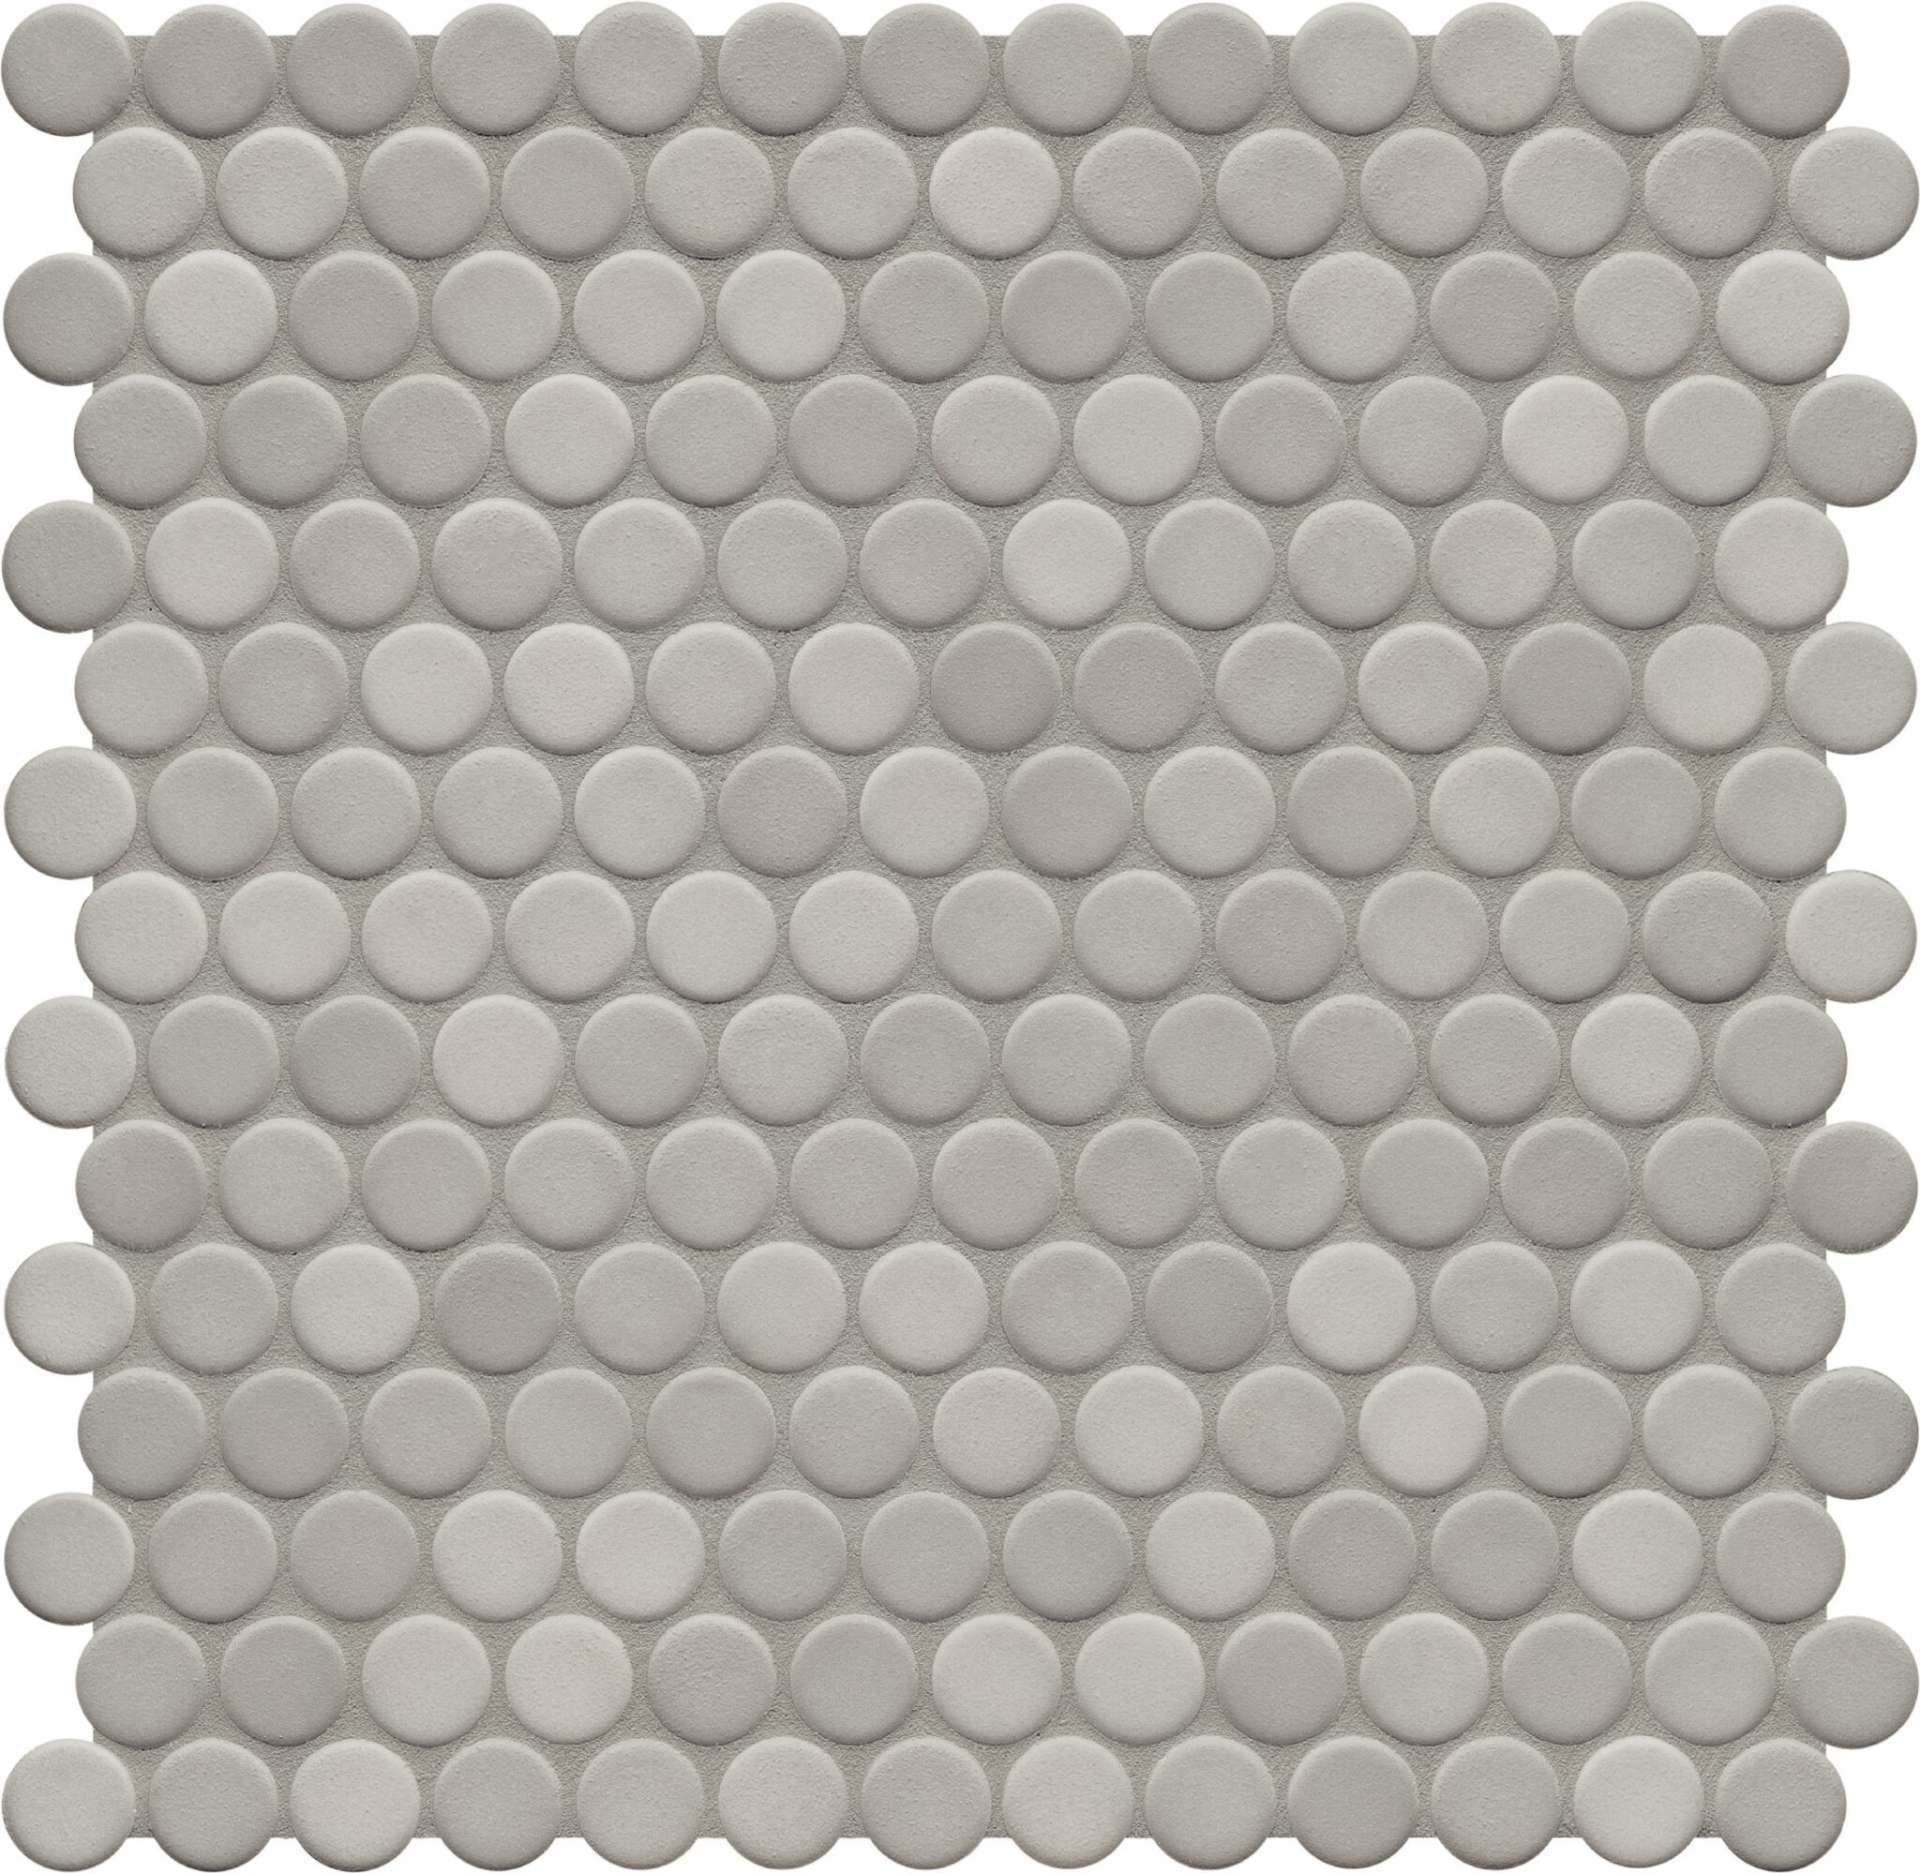 Мозаика Jasba Loop Diamantgrau Hell 40044H-44, цвет серый, поверхность матовая, круг и овал, 312x316